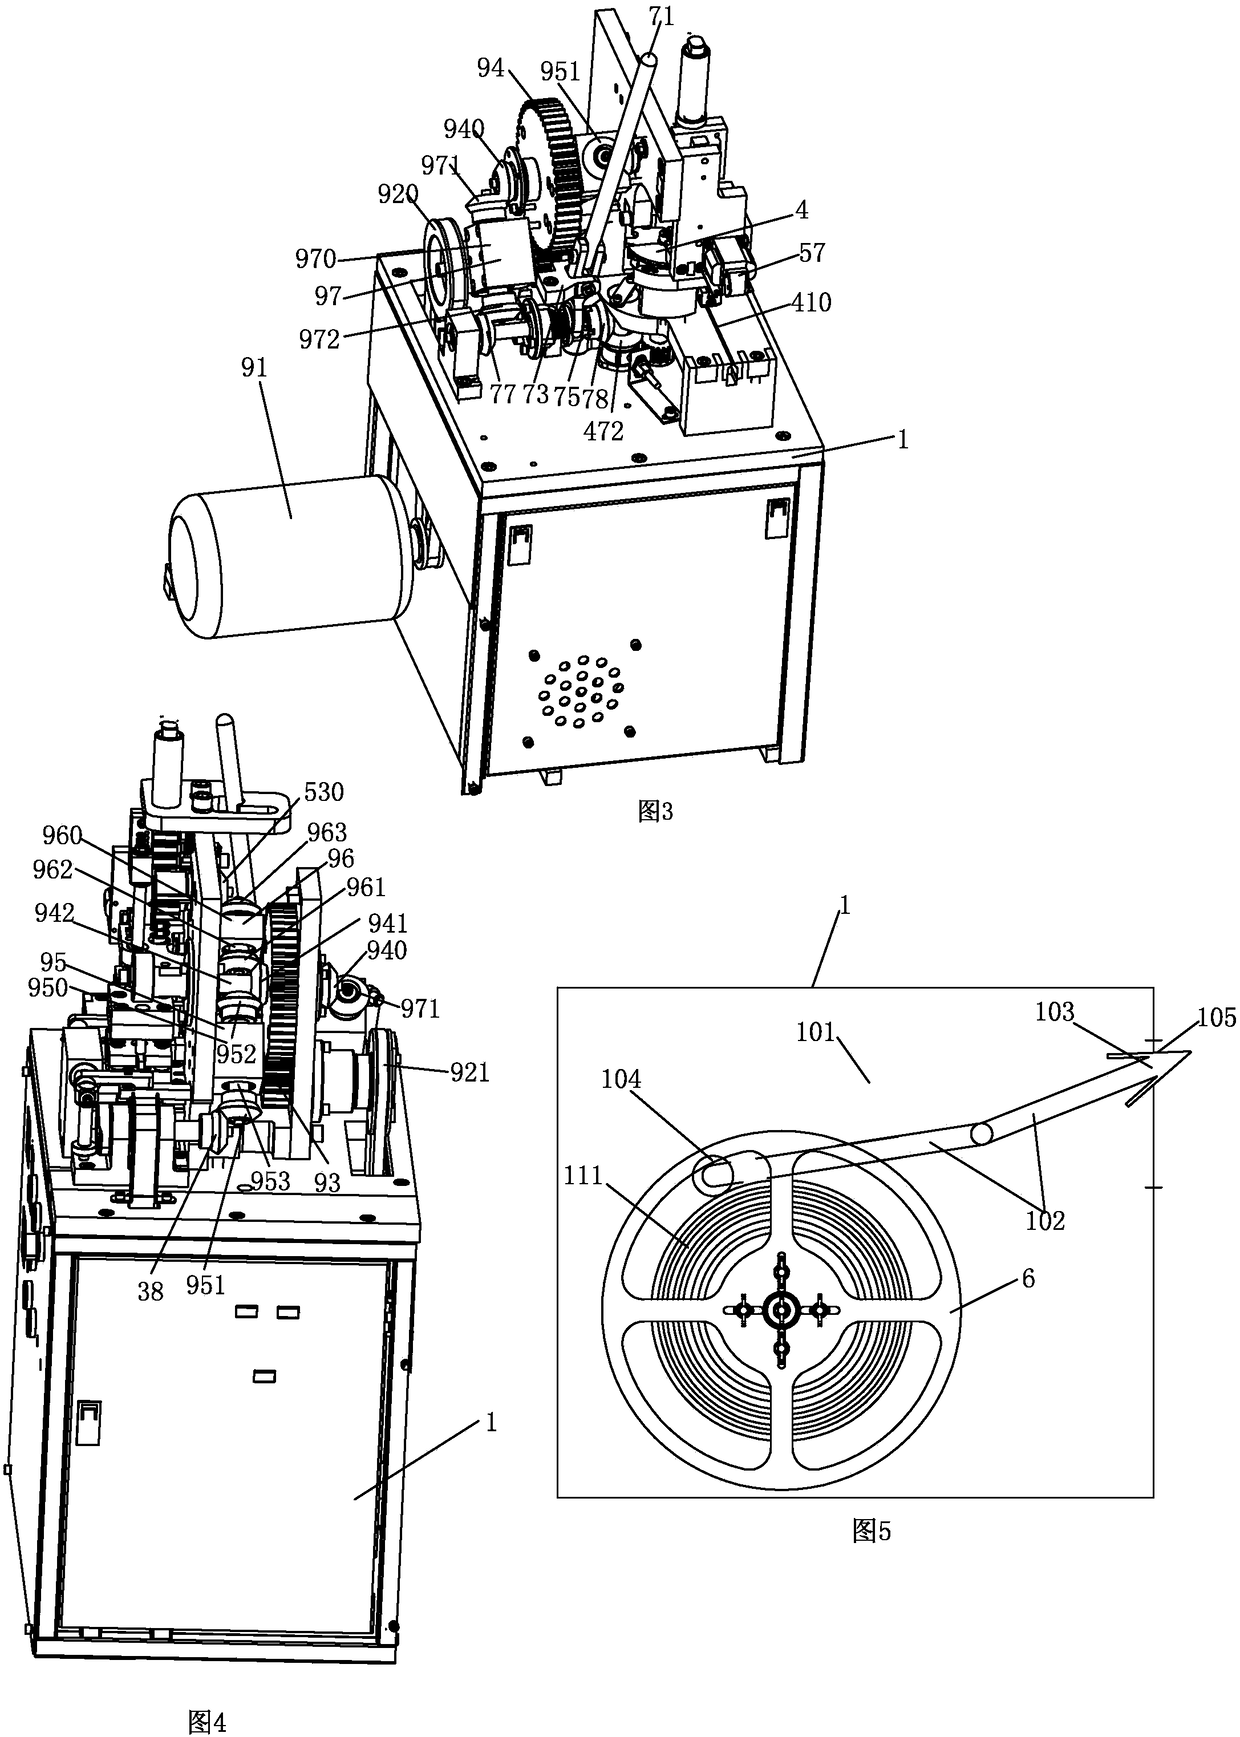 Drawing pin driving mechanism of drawing pin strip forming machine